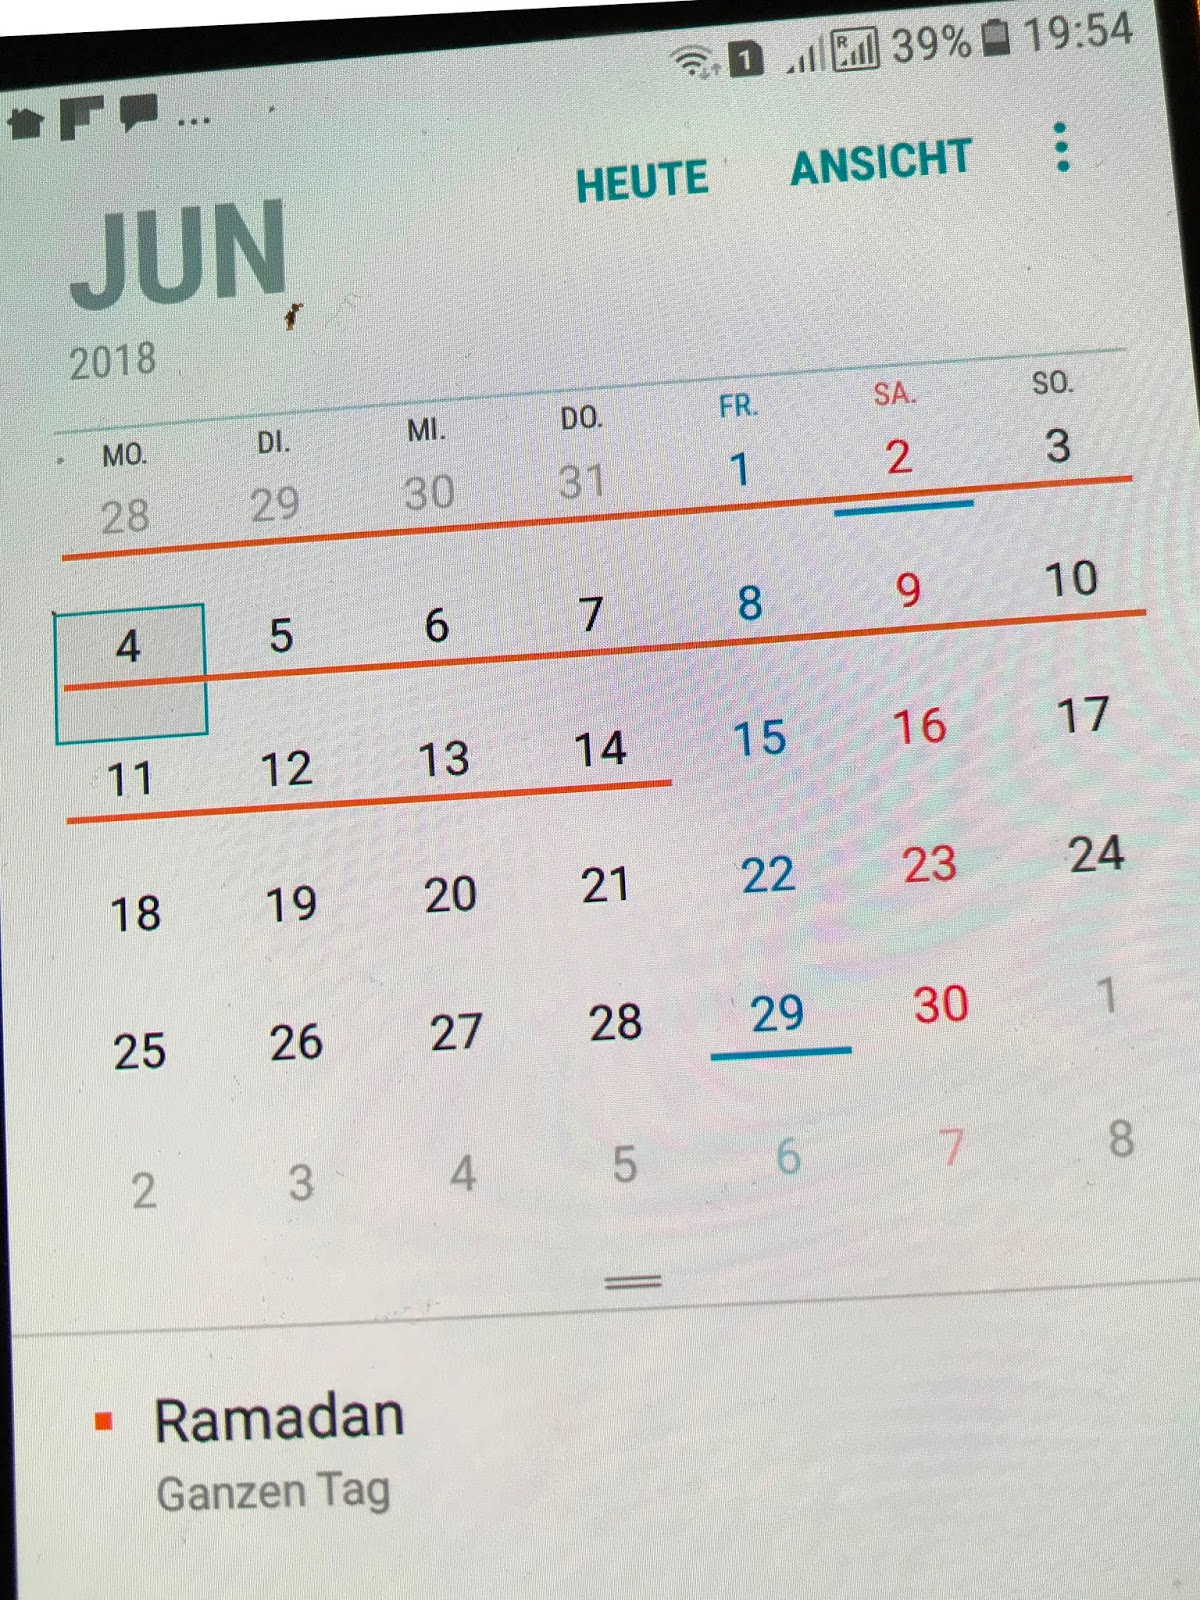 Keesjemaduraatje How can I remove Ramadan notification in my calendar?